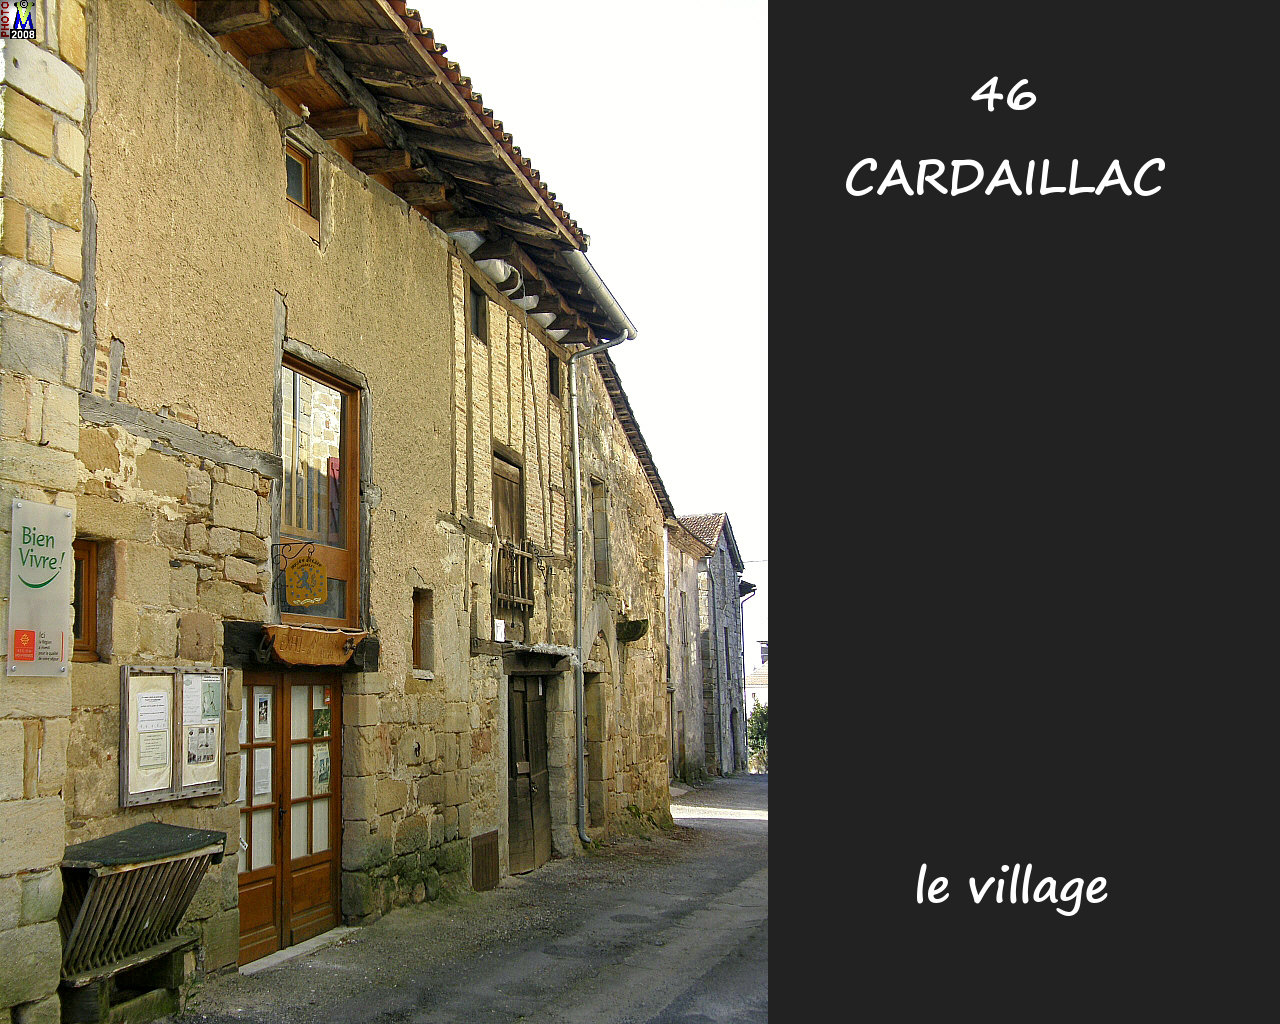 46CARDAILLAC_village_208.jpg